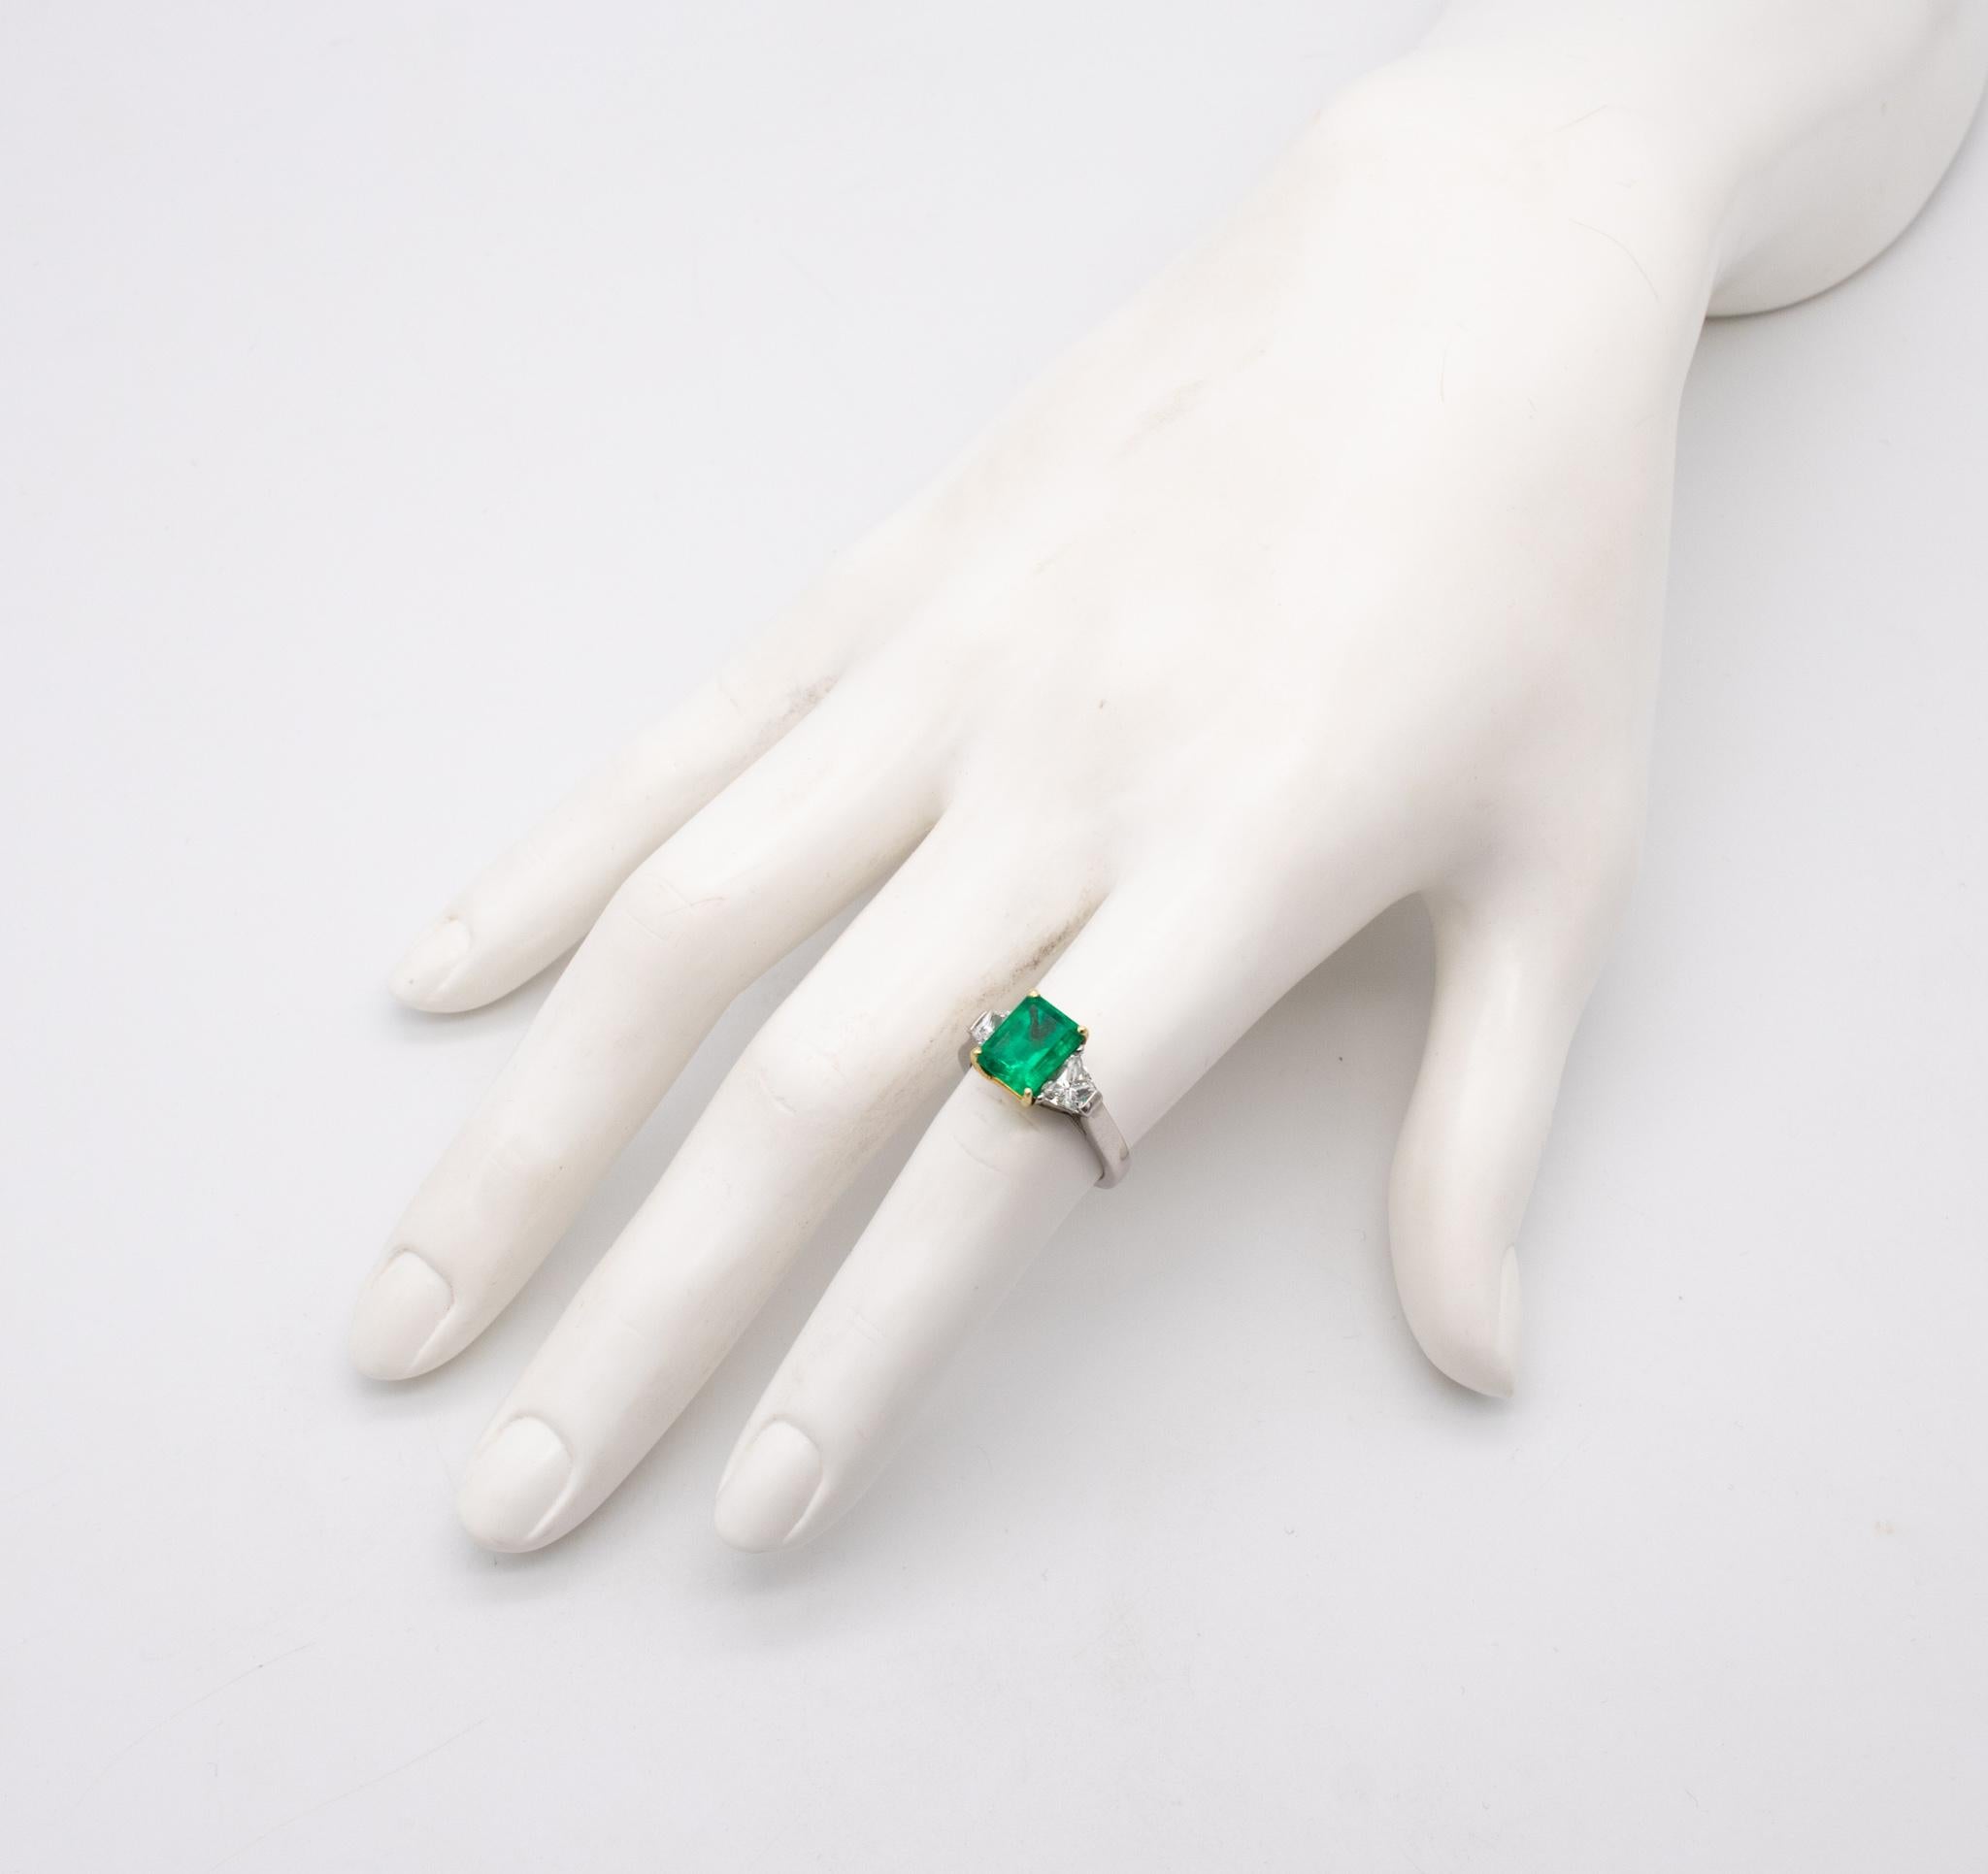 Emerald Cut Oscar Heyman Gia Certified Classic Ring Plat 18Kt Gold 3.19 Cts Diamonds Emerald For Sale